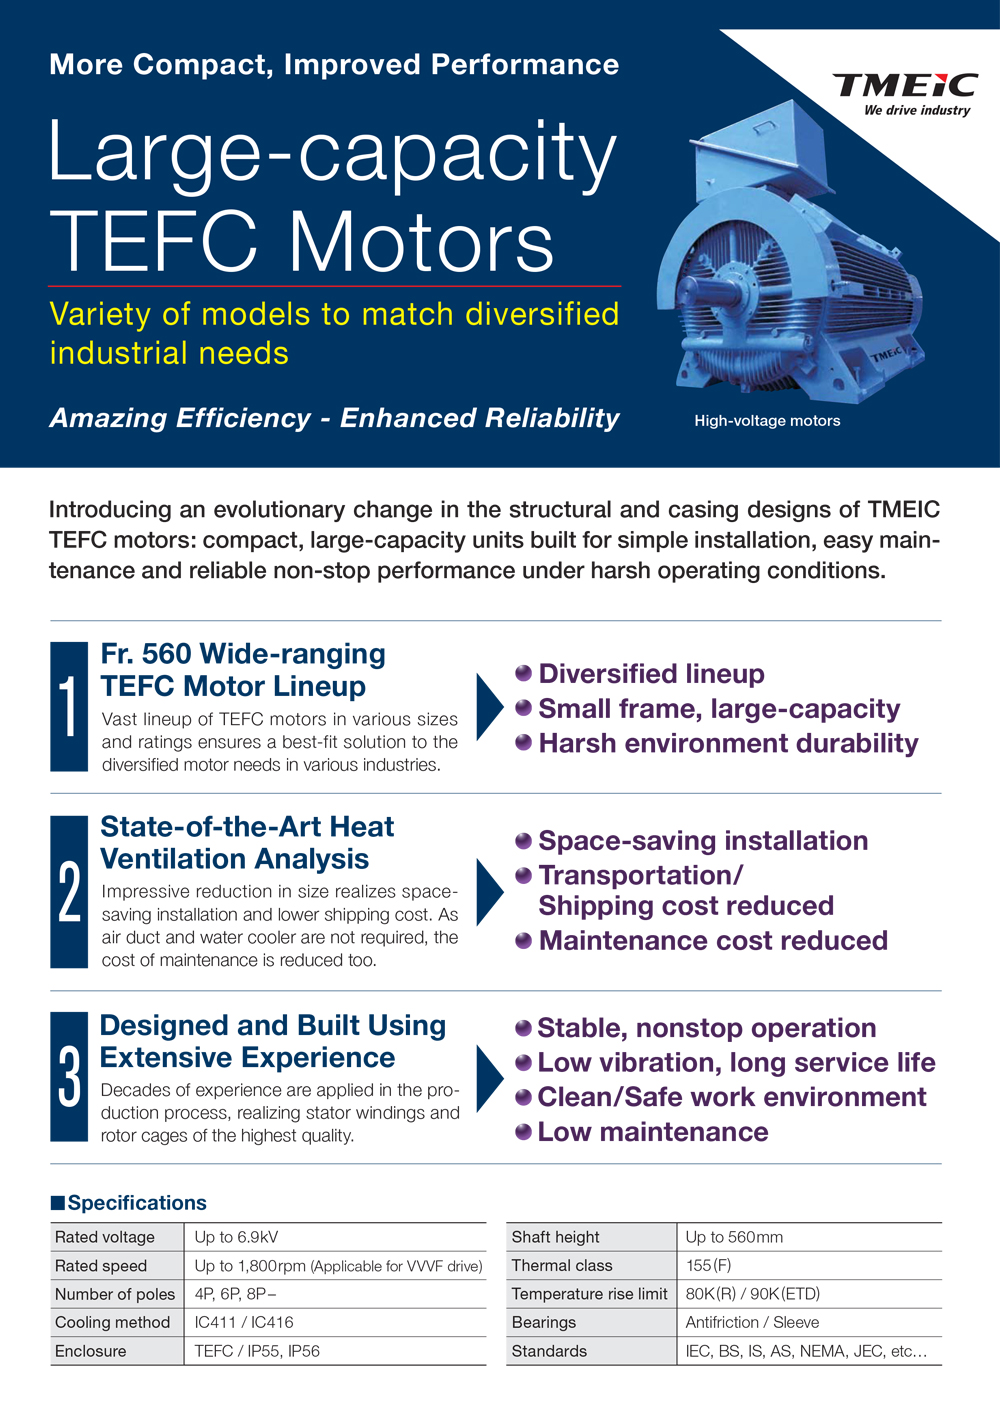 Large-capacity TEFC Motors